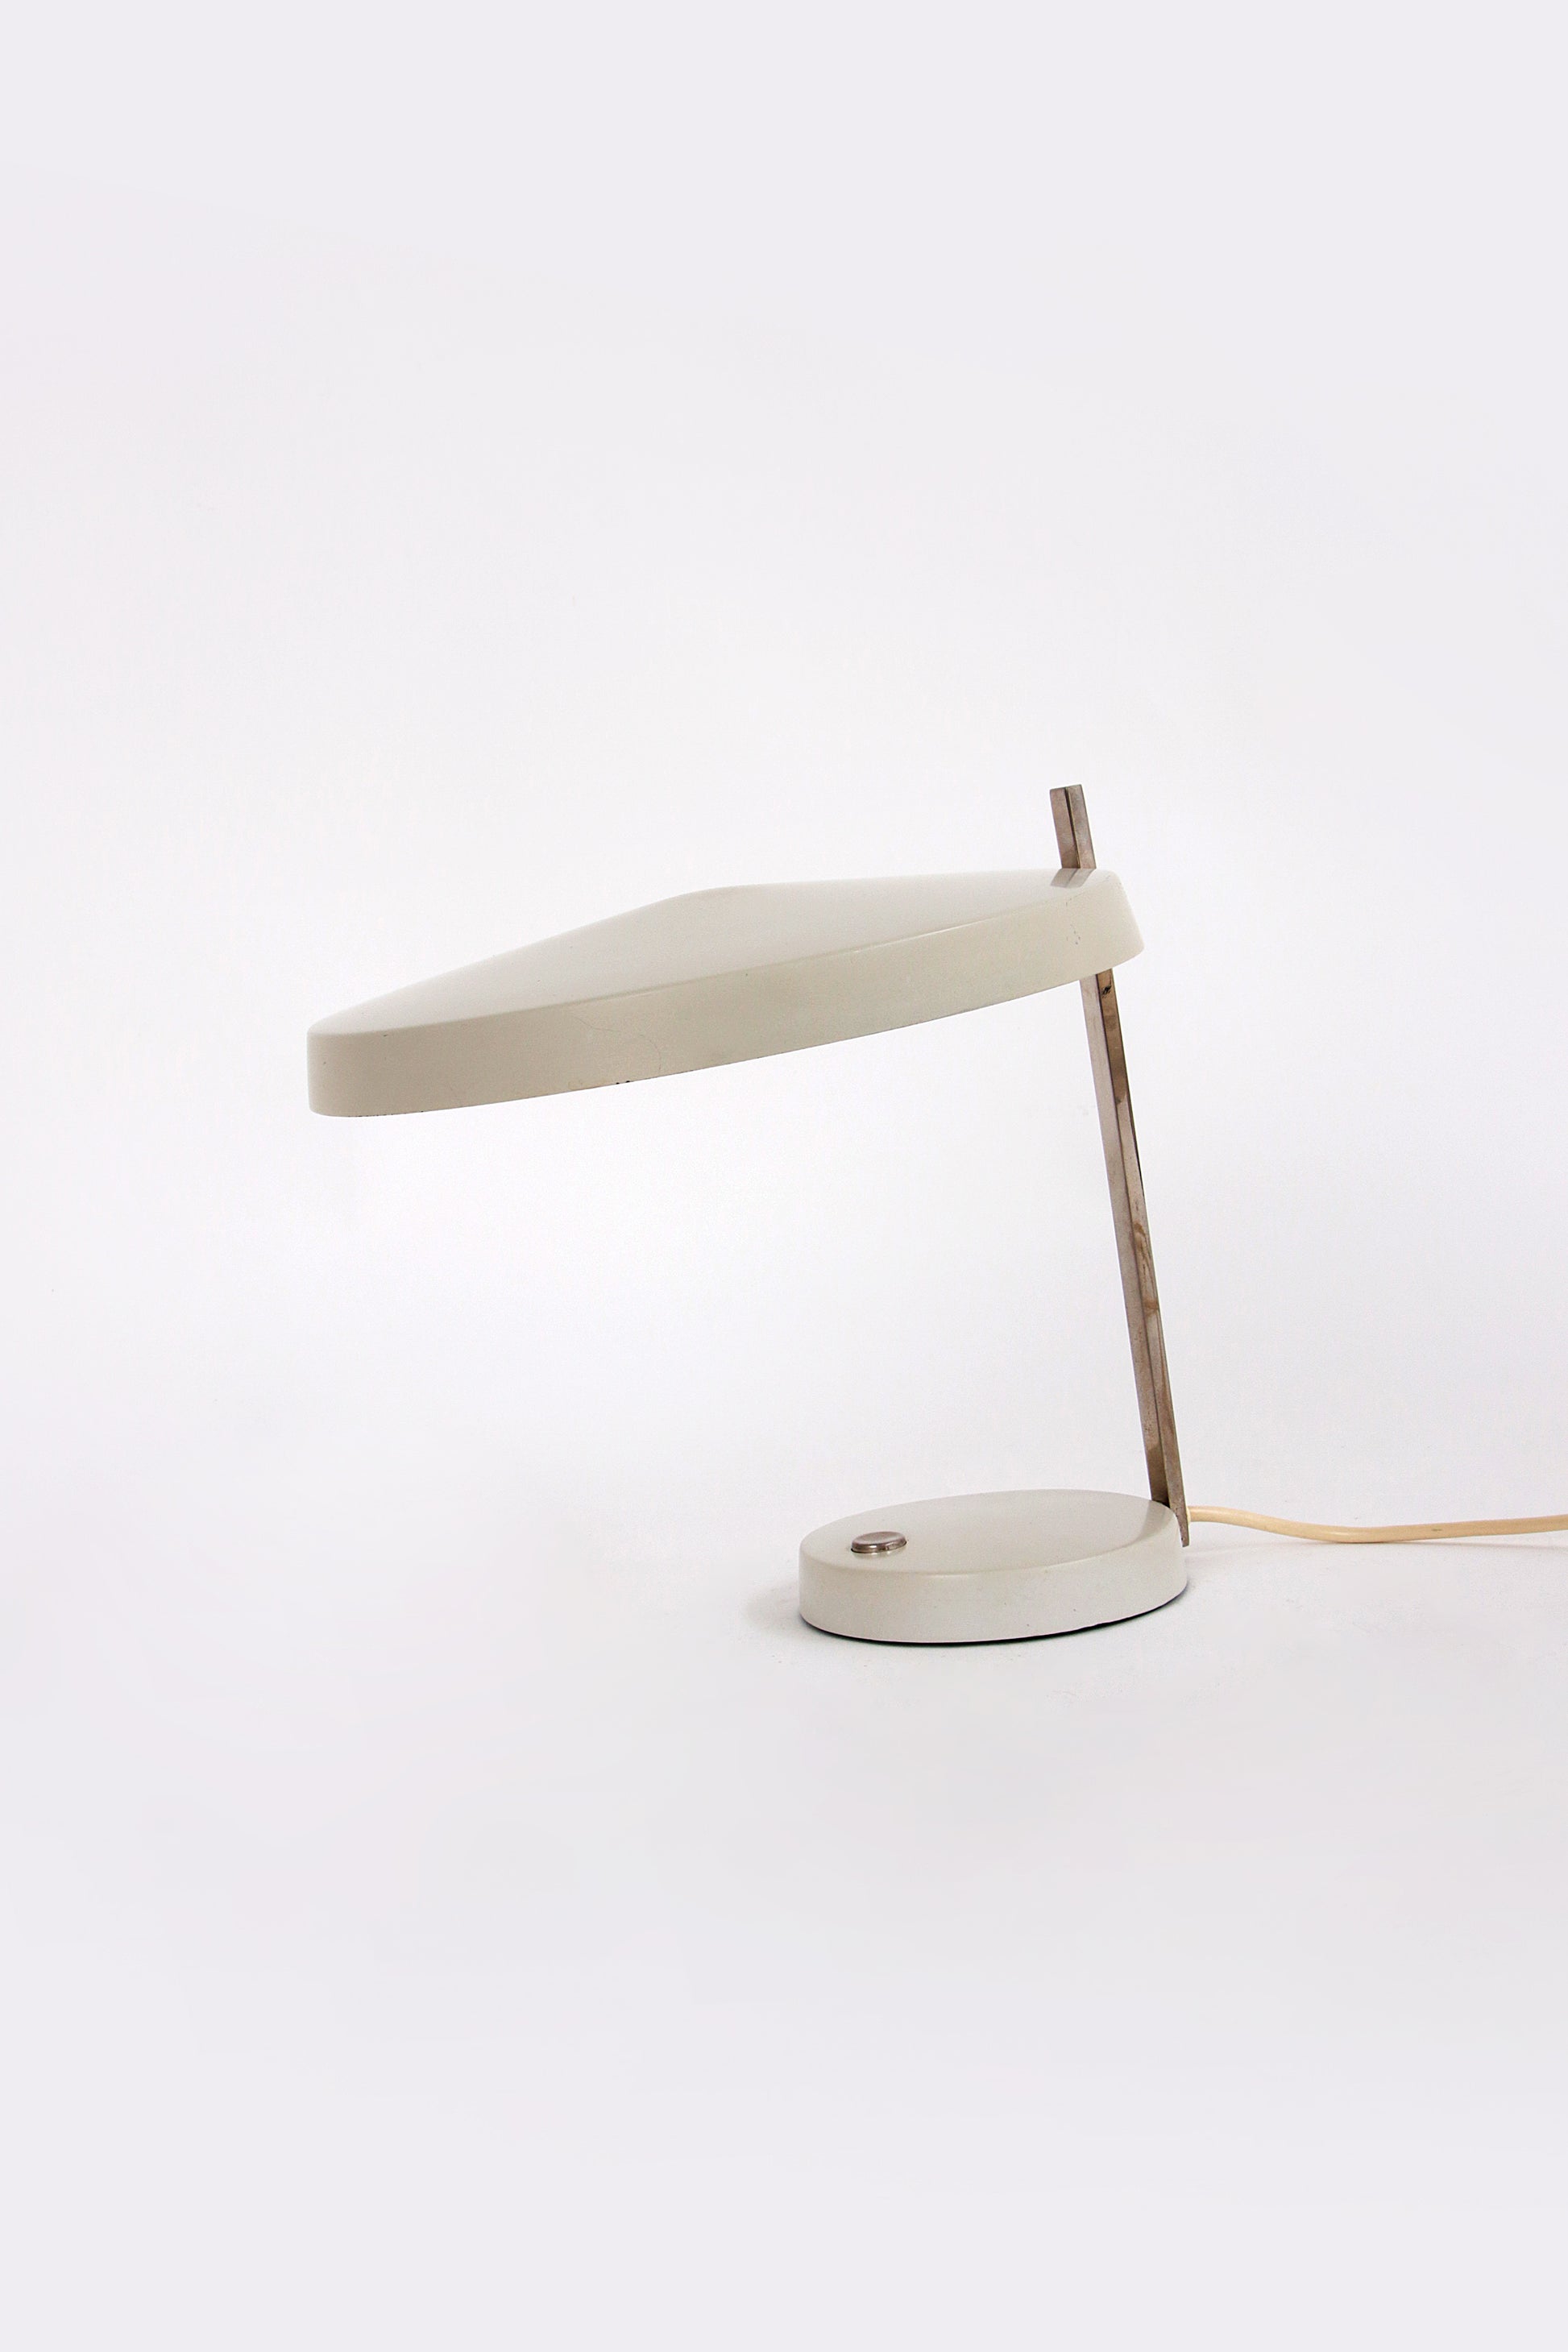 Hillebrand leuchten, bureaulamp Oslo ontworpen door Heinz Pfaender 1960.